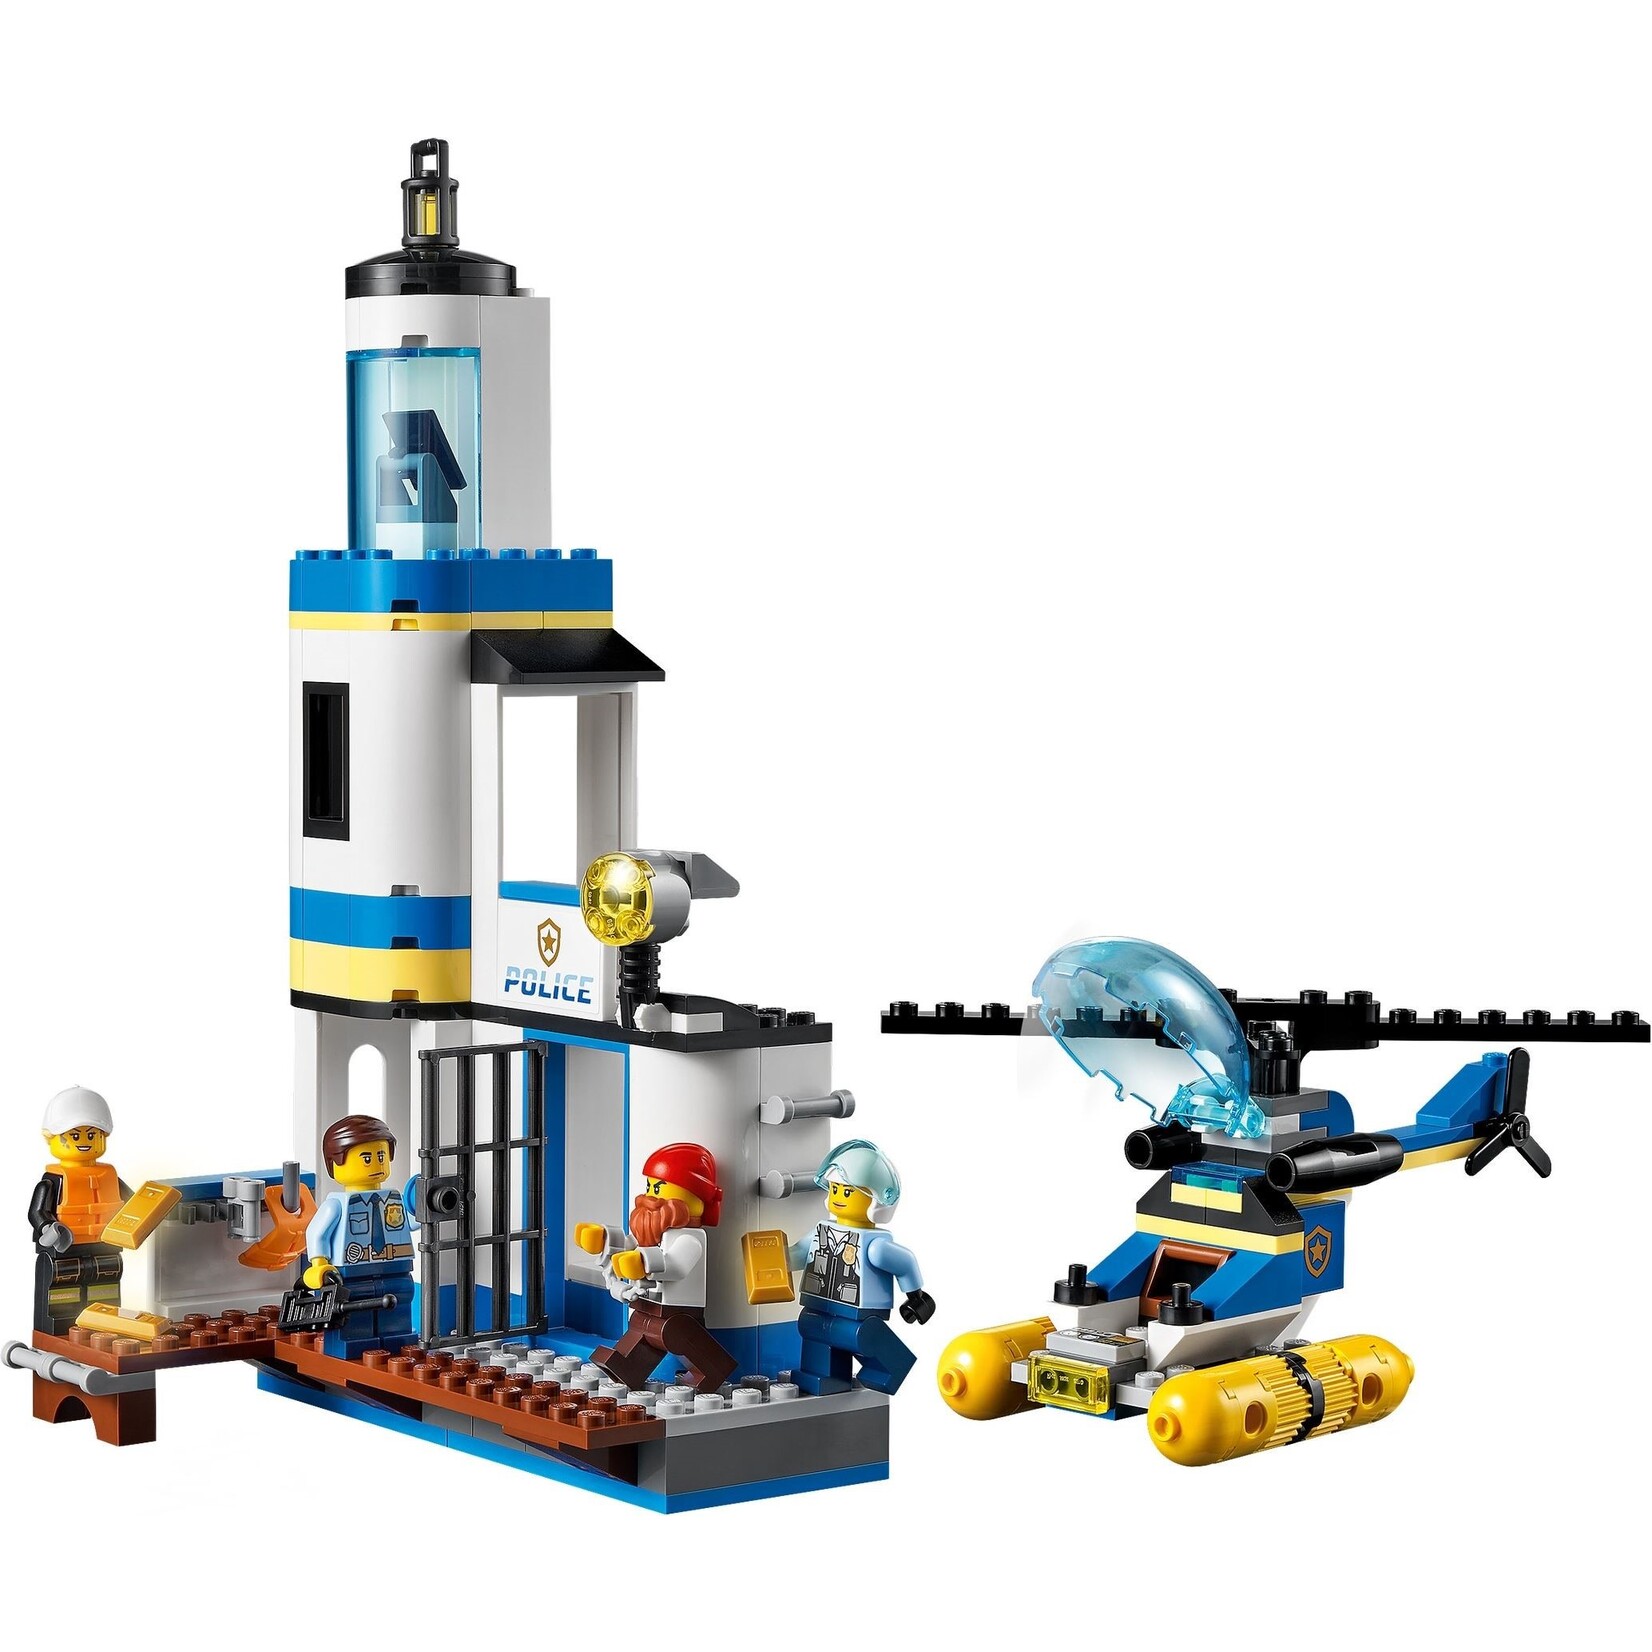 LEGO Kustpolitie en brandmissie - 60308